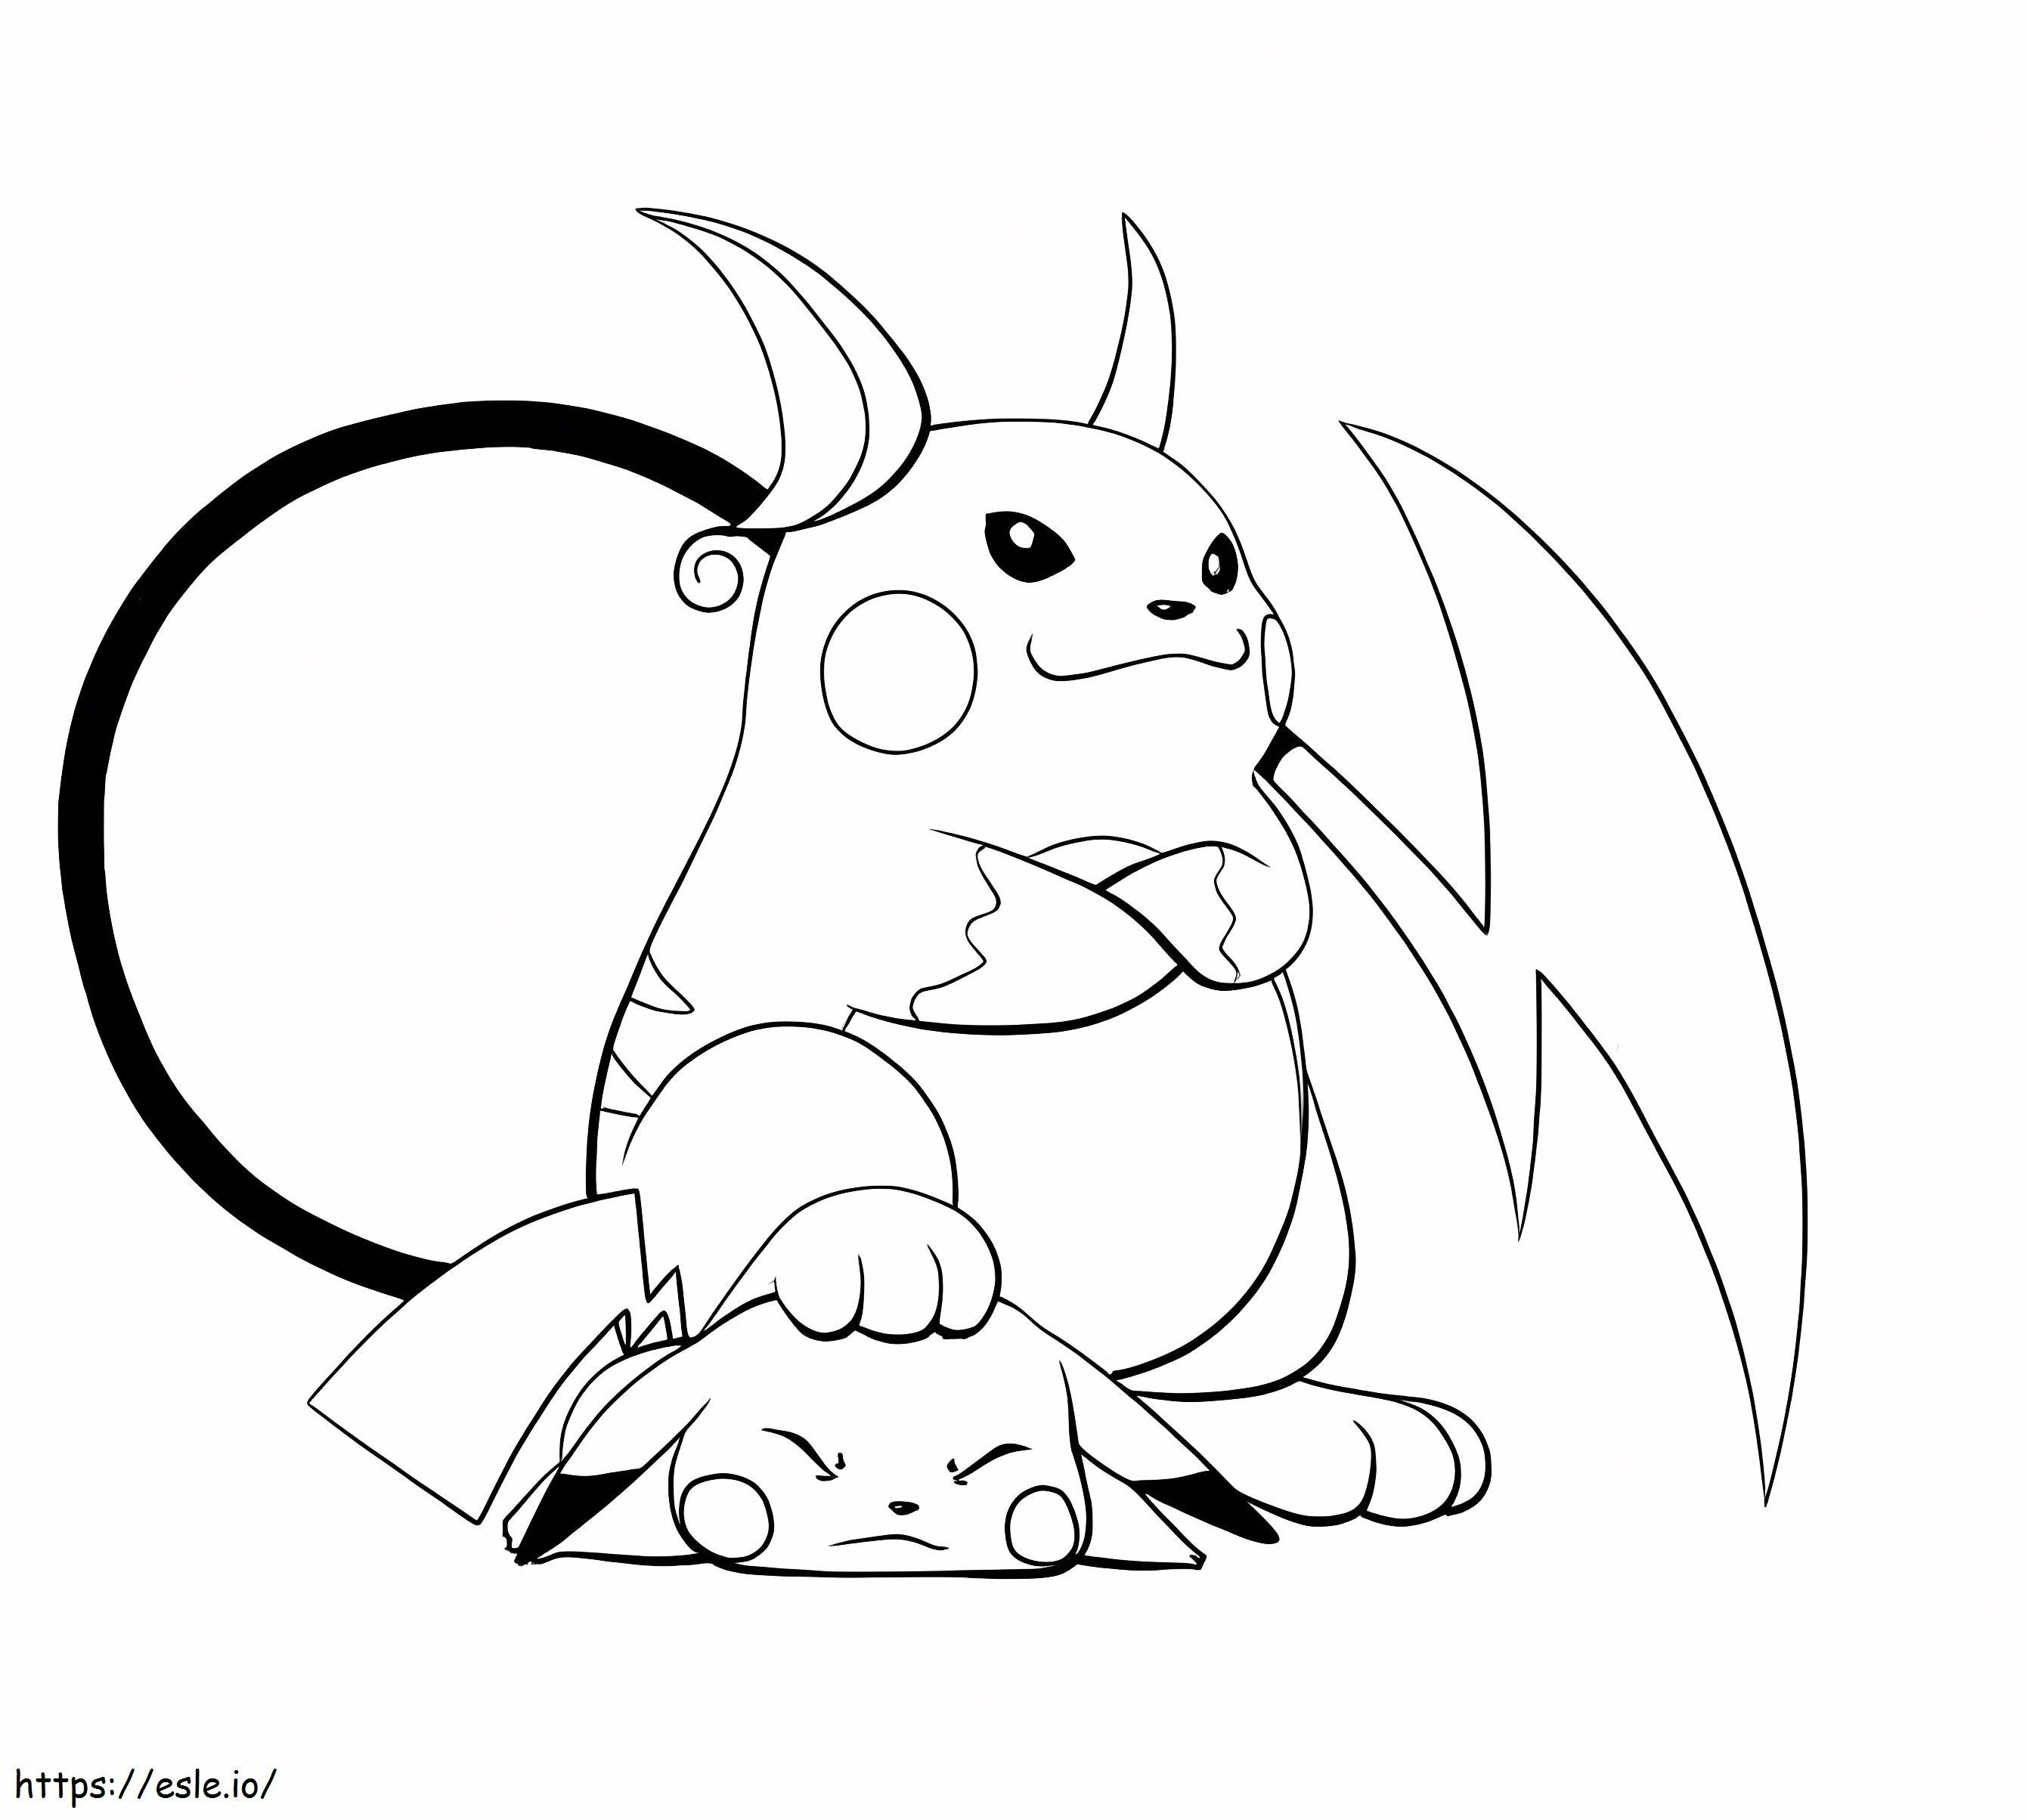 Coloriage Raichu et Pikachu à imprimer dessin